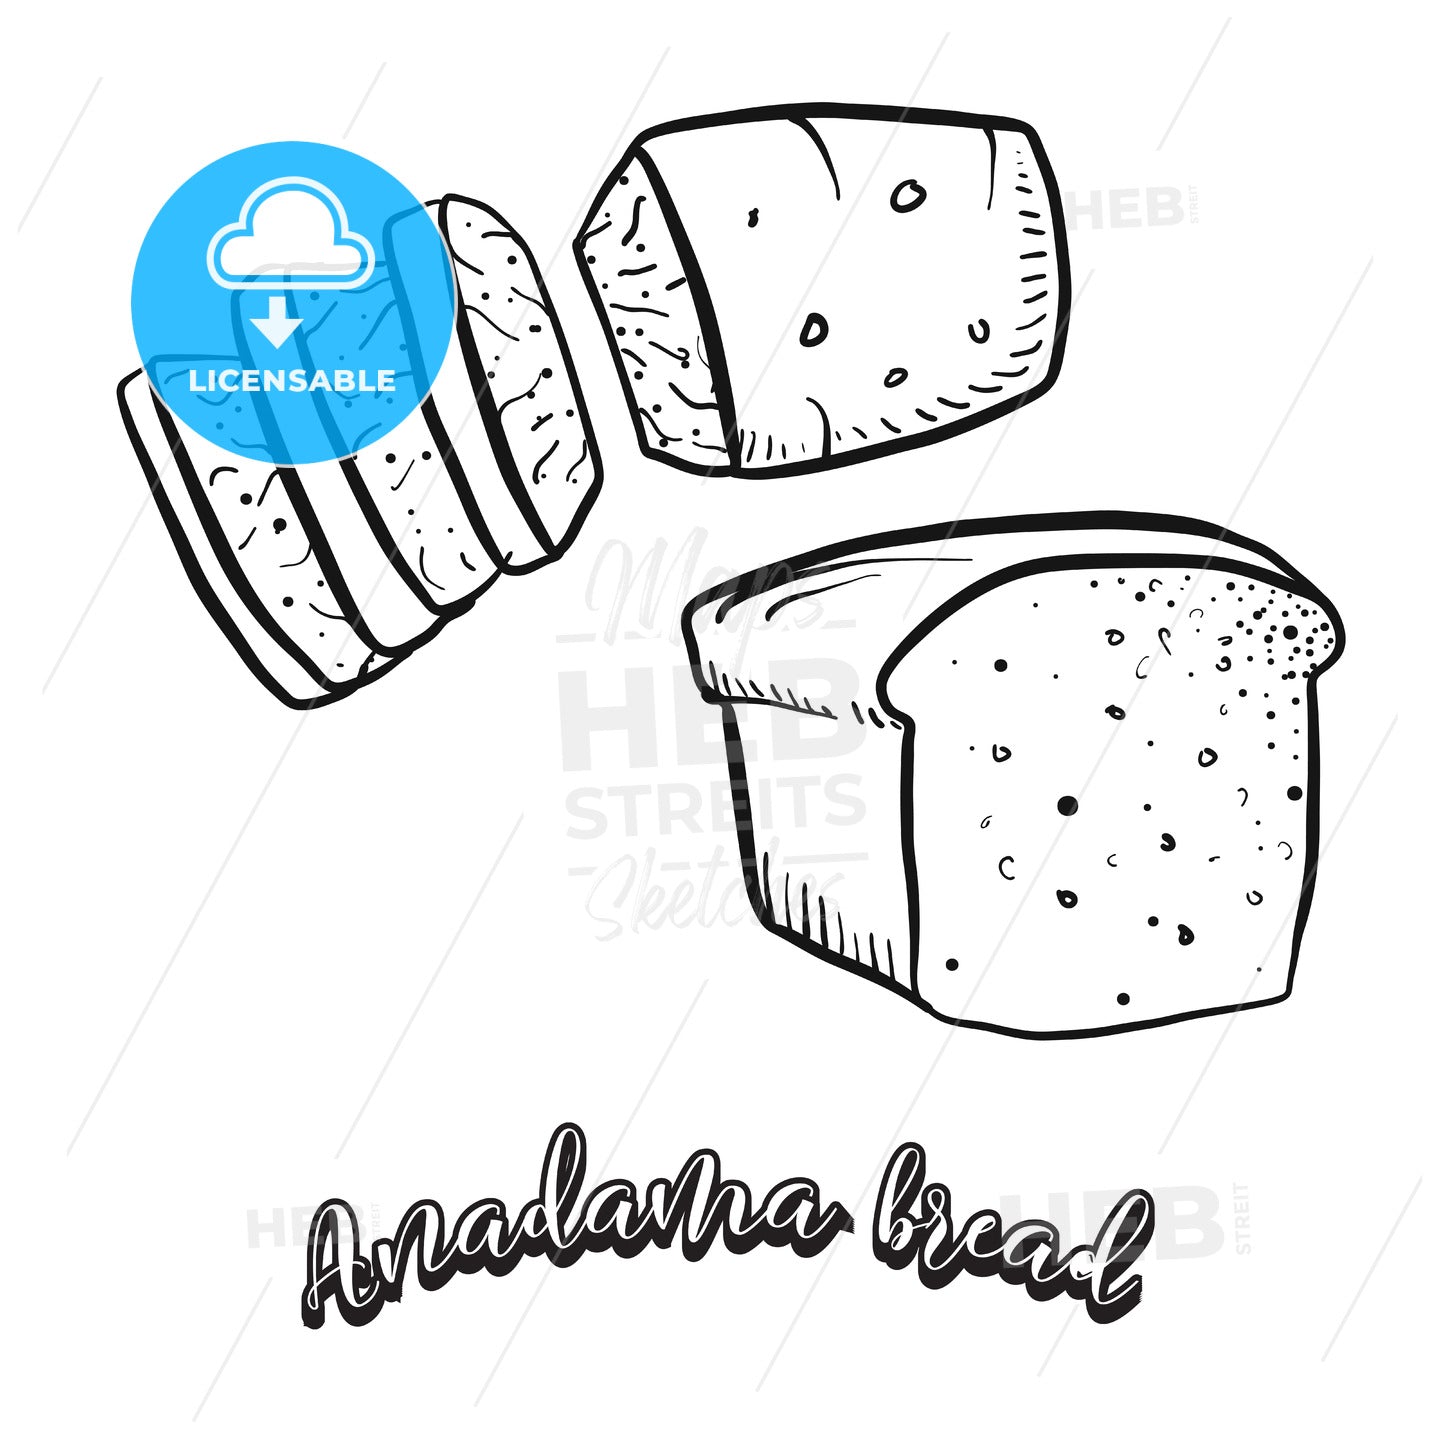 Hand drawn sketch of Anadama bread food – instant download